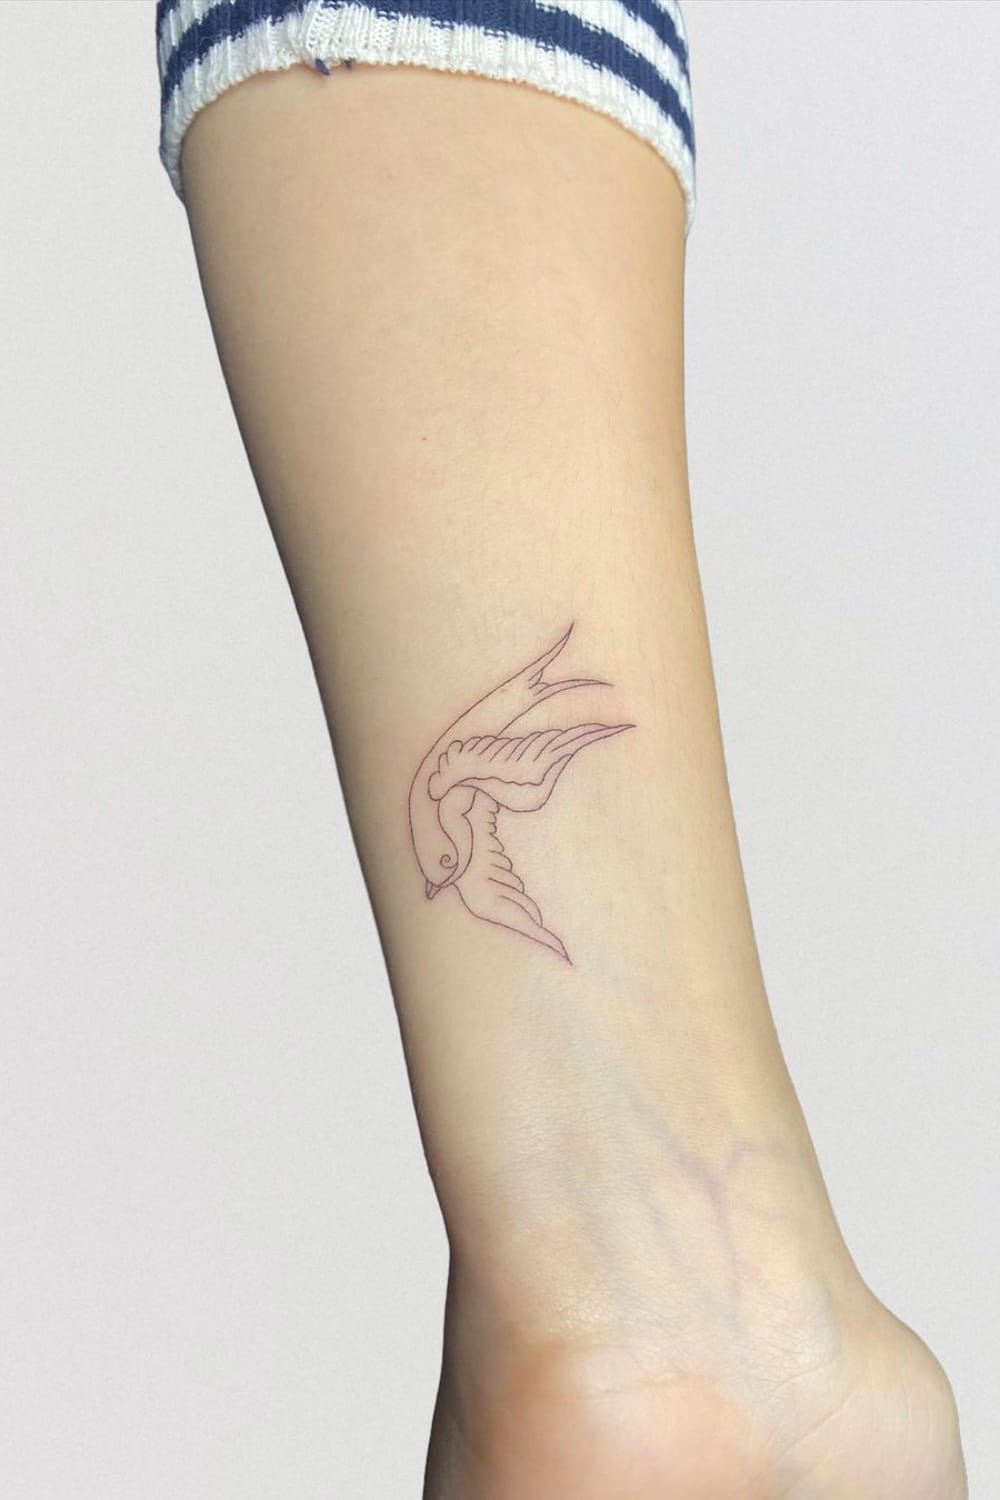 Swallow Tattoo on the Wrist